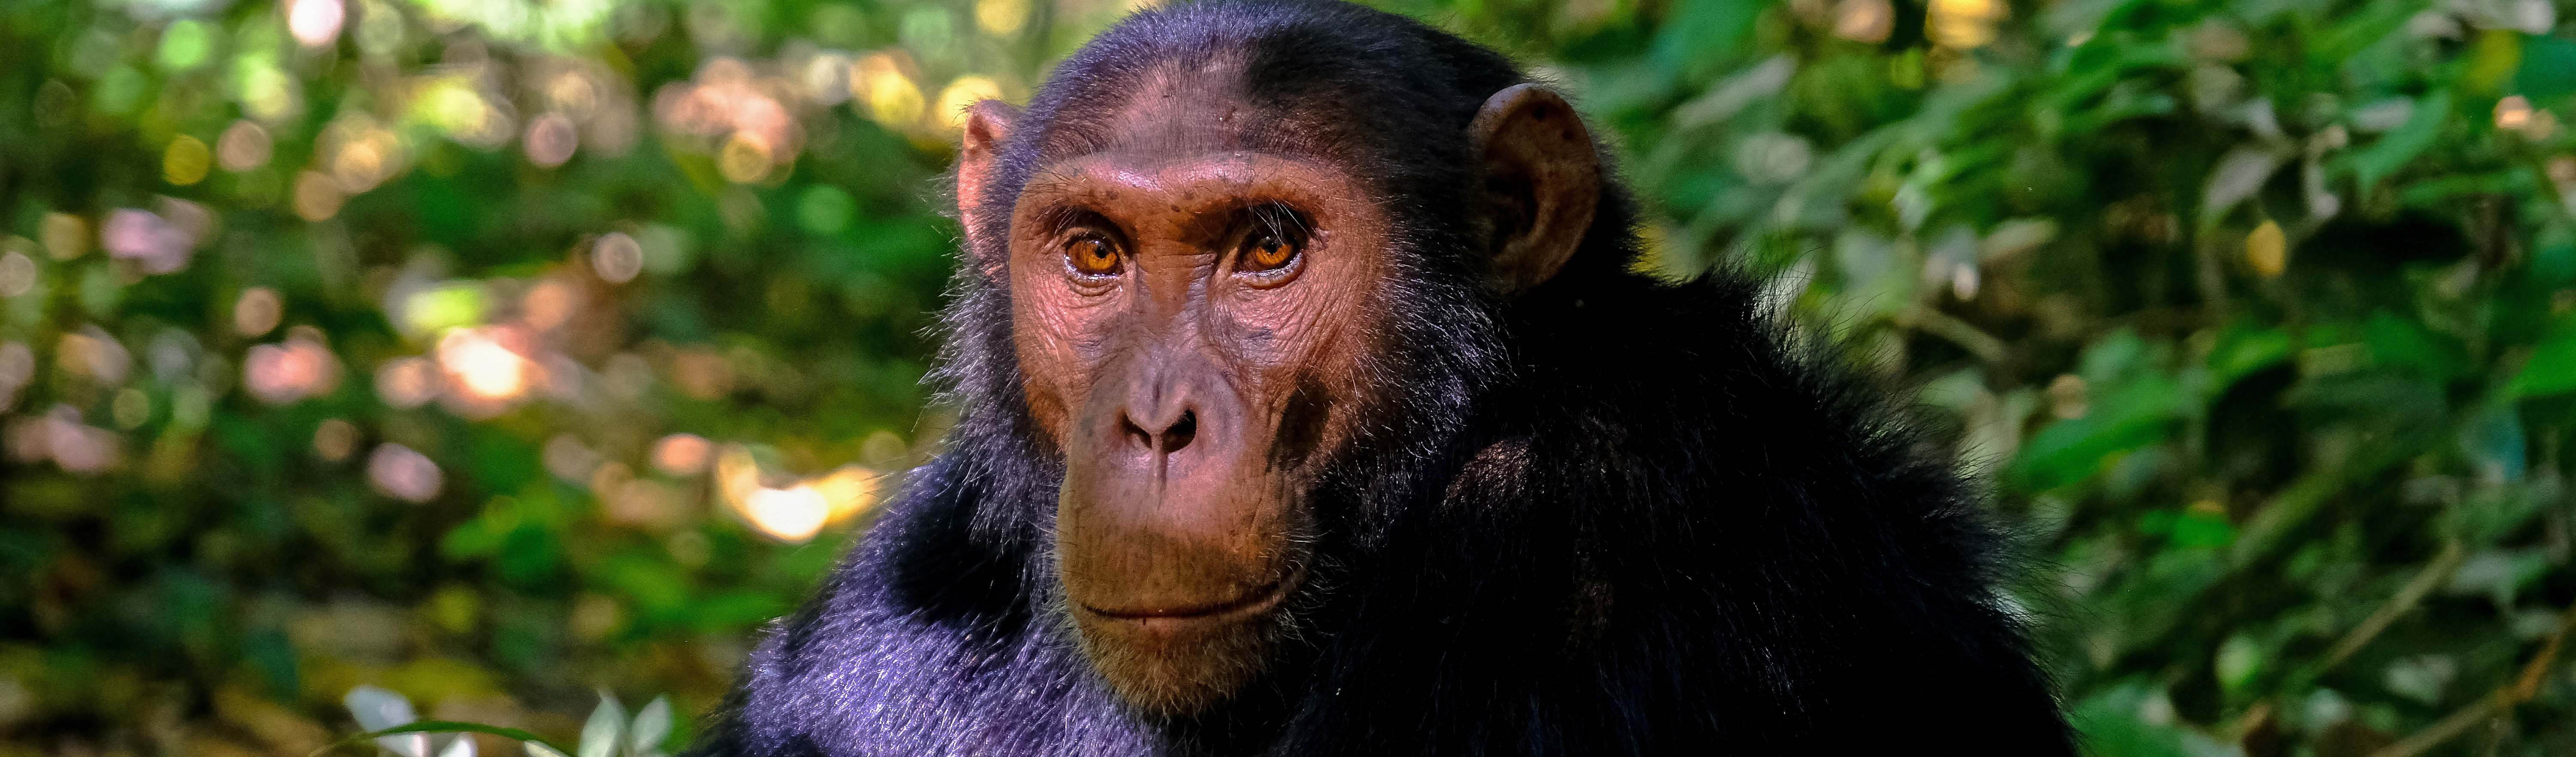 Chimpanzee in Uganda | Franceso Ungaro